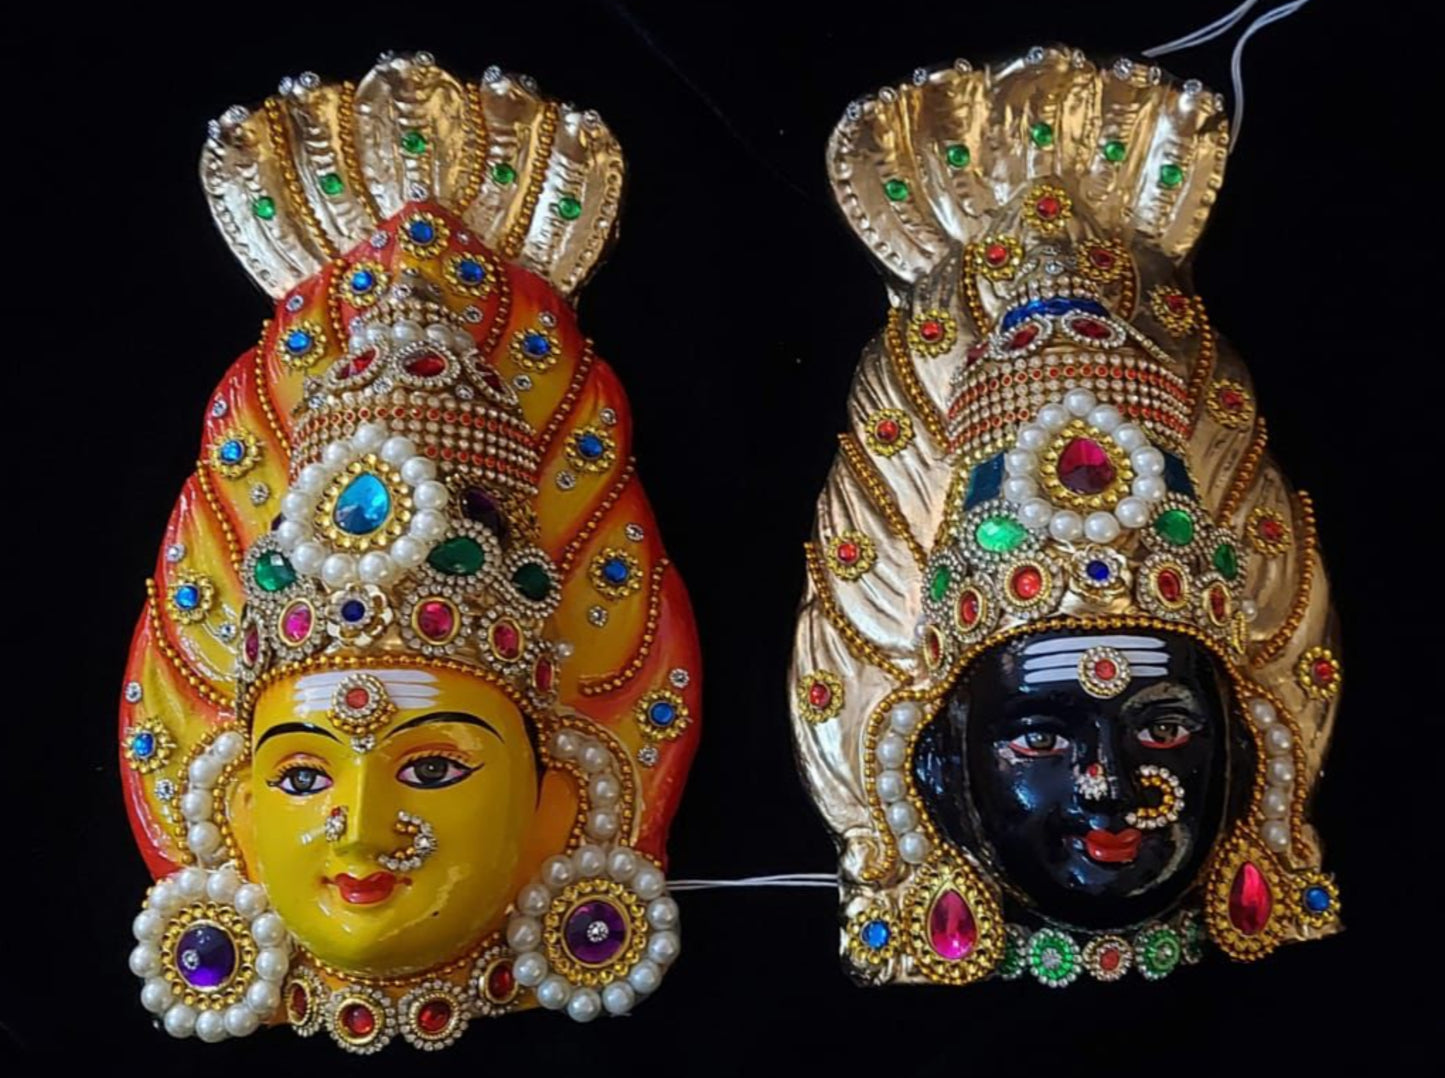 Divine Muthumariamman and Karumariamman Face: Handcrafted Paper Mache